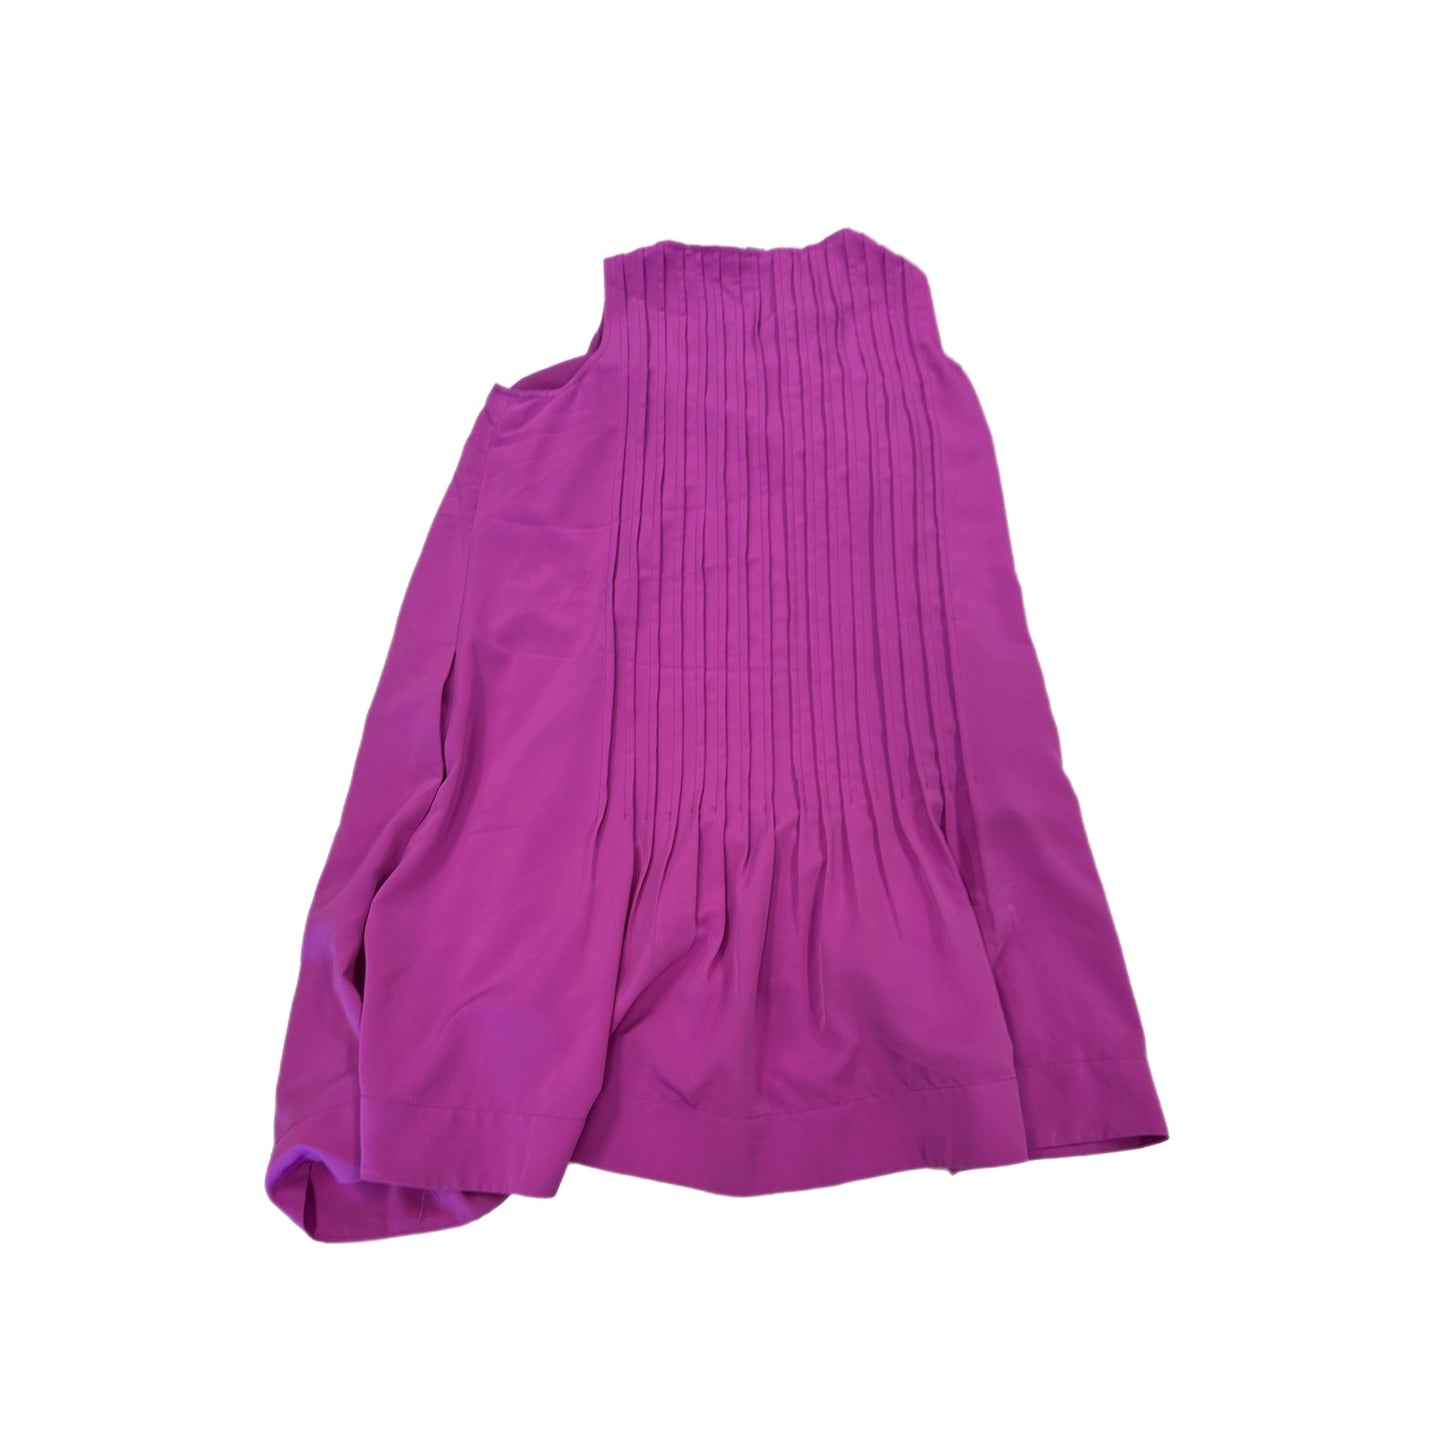 Dress Casual Short By Lauren By Ralph Lauren  Size: 12